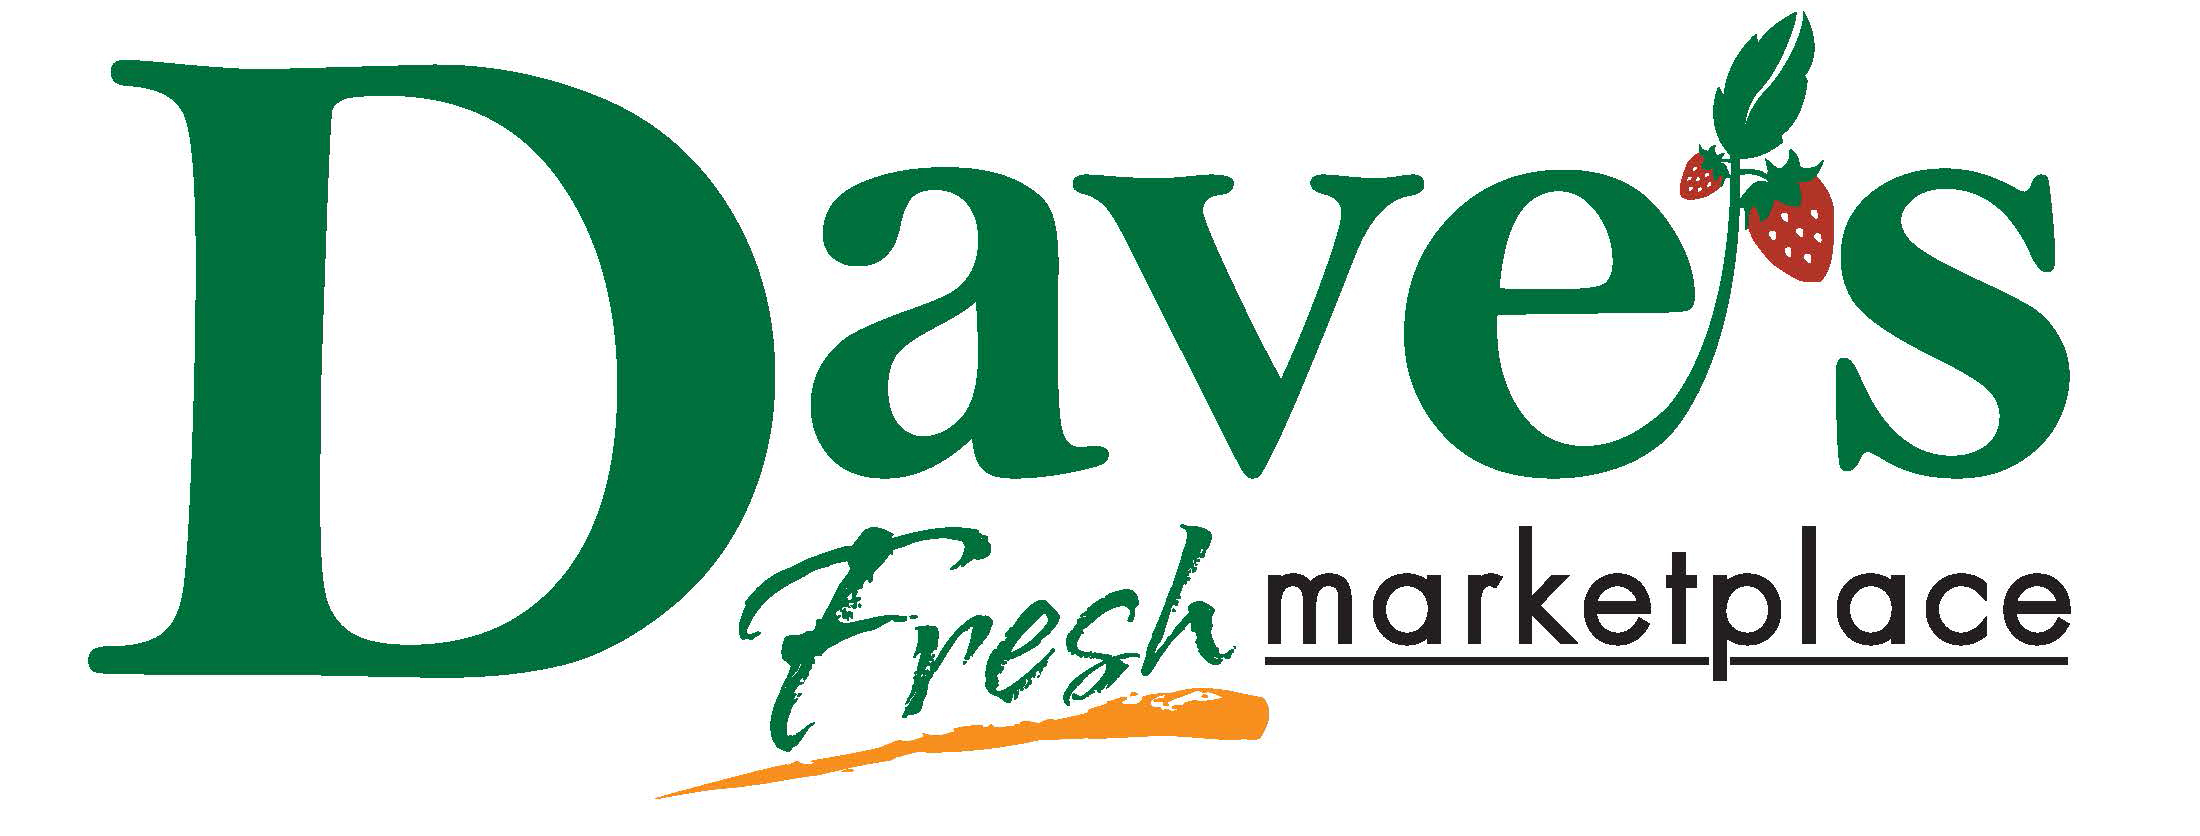 Dave's Fresh Marketplace